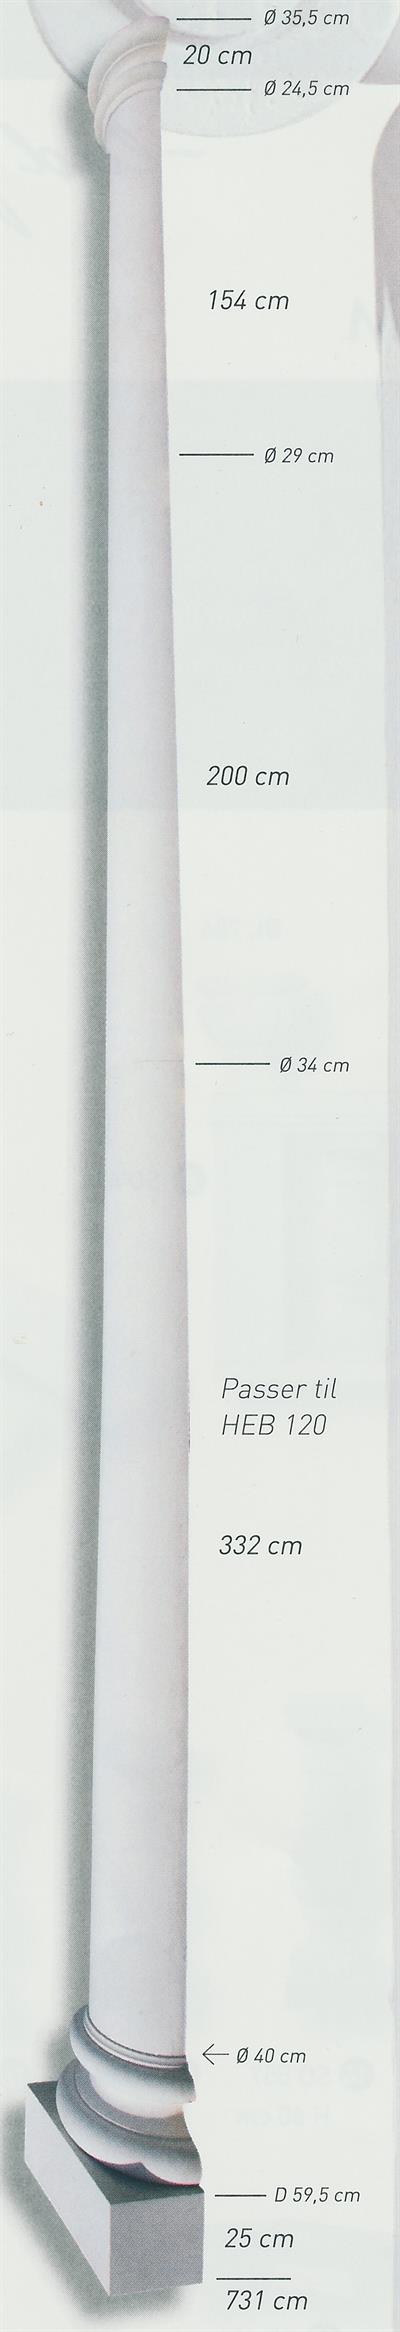 Halvsøjle - 731 cm.